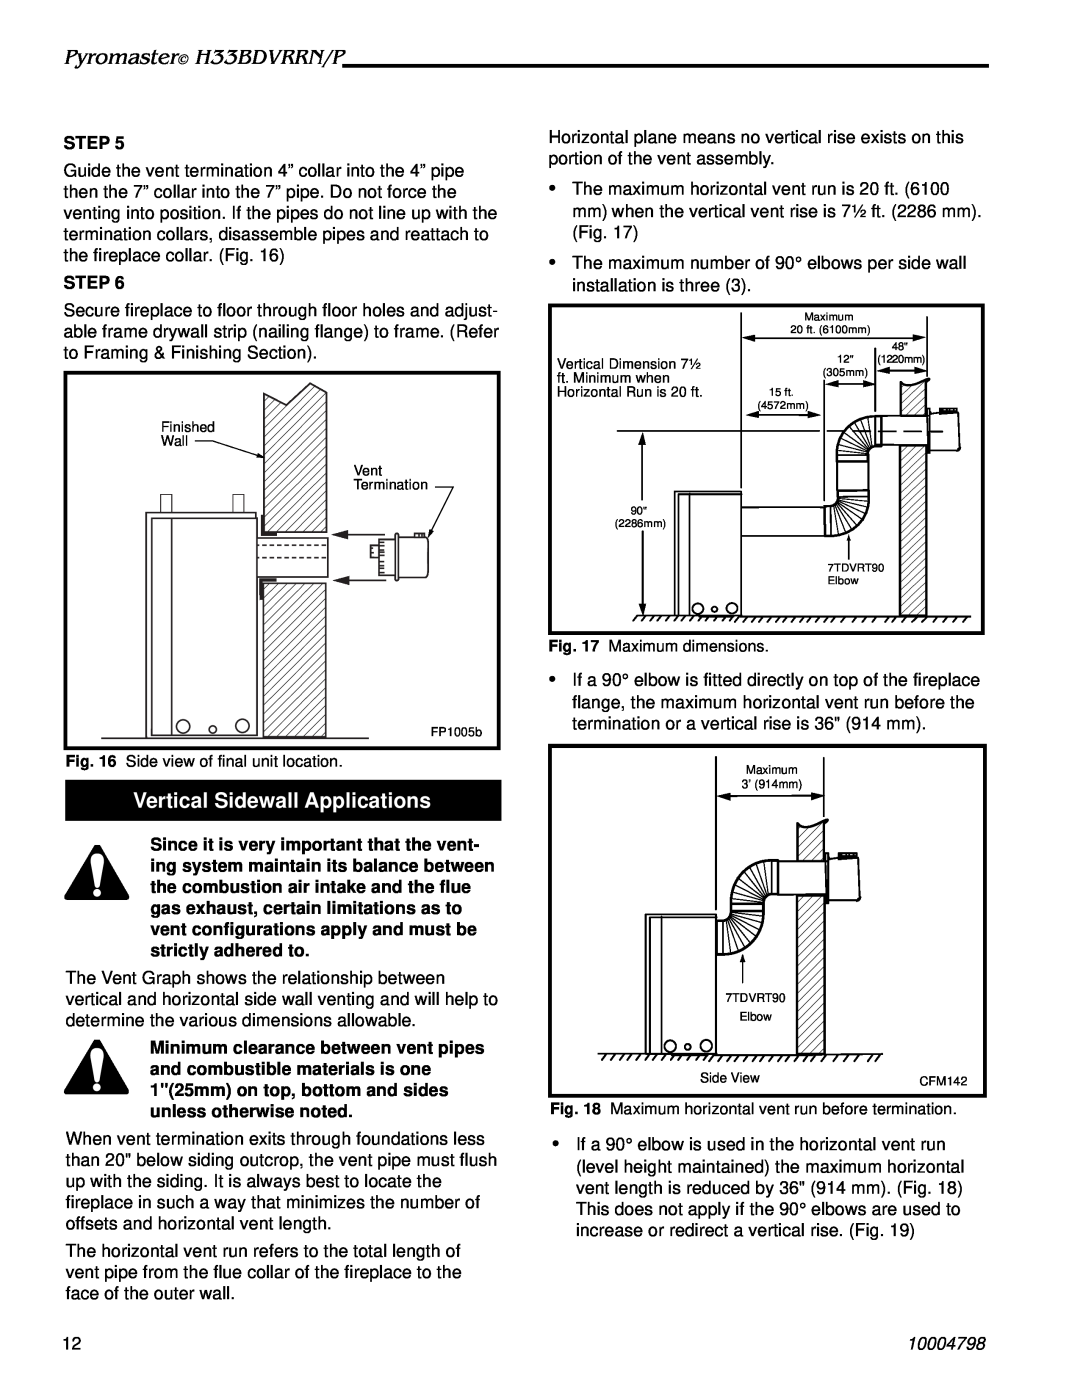 Vermont Casting H33BDVRRNP manual Vertical Sidewall Applications, Pyromaster H33BDVRRN/P, Step, 10004798 